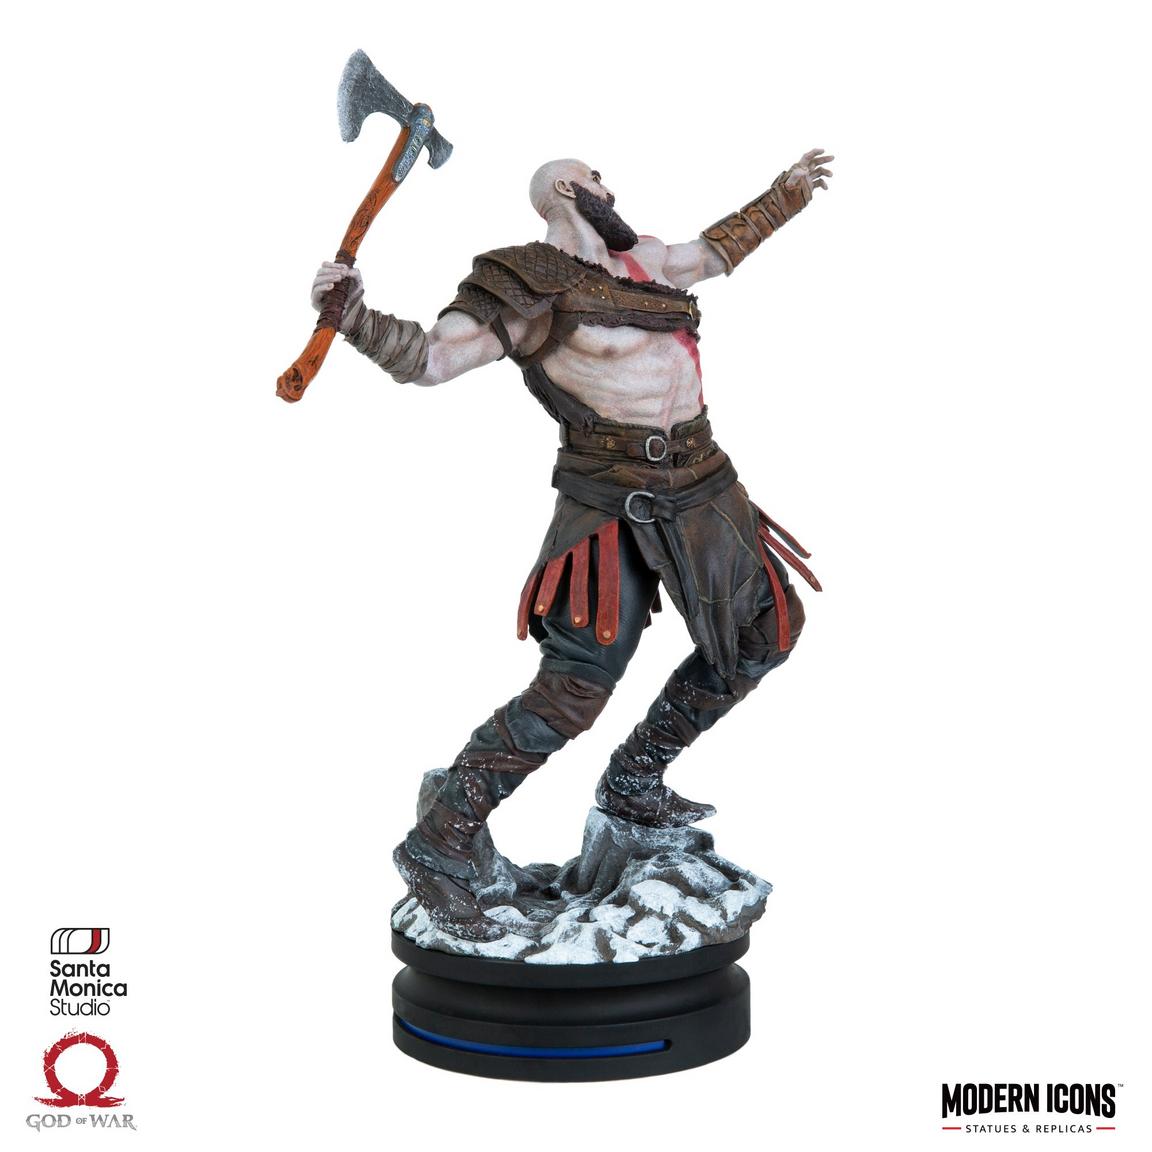 Modern-Icons-God-of-War-Kratos-Modern-Icon-Statue-GameStop-Exclusive (1)